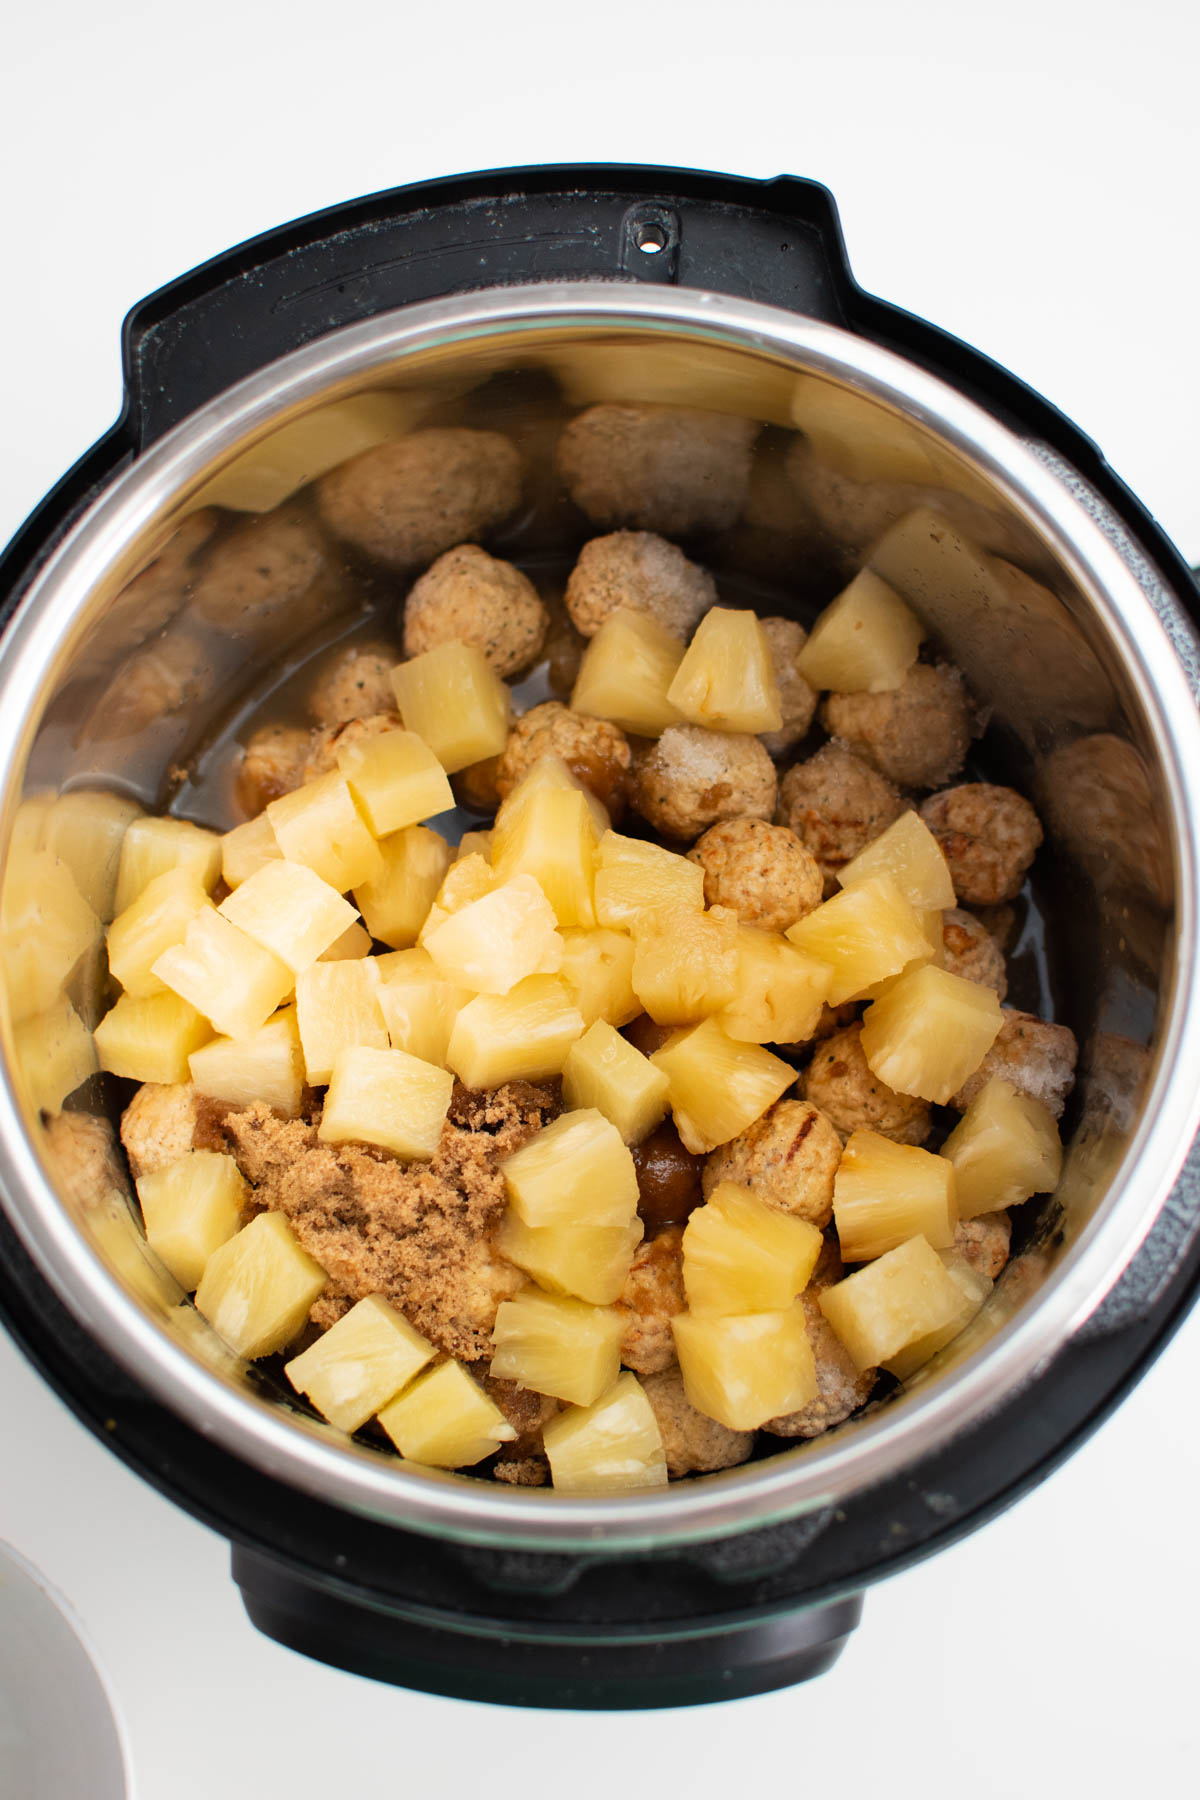 Pineapple chunks and frozen meatballs in Instant Pot insert.